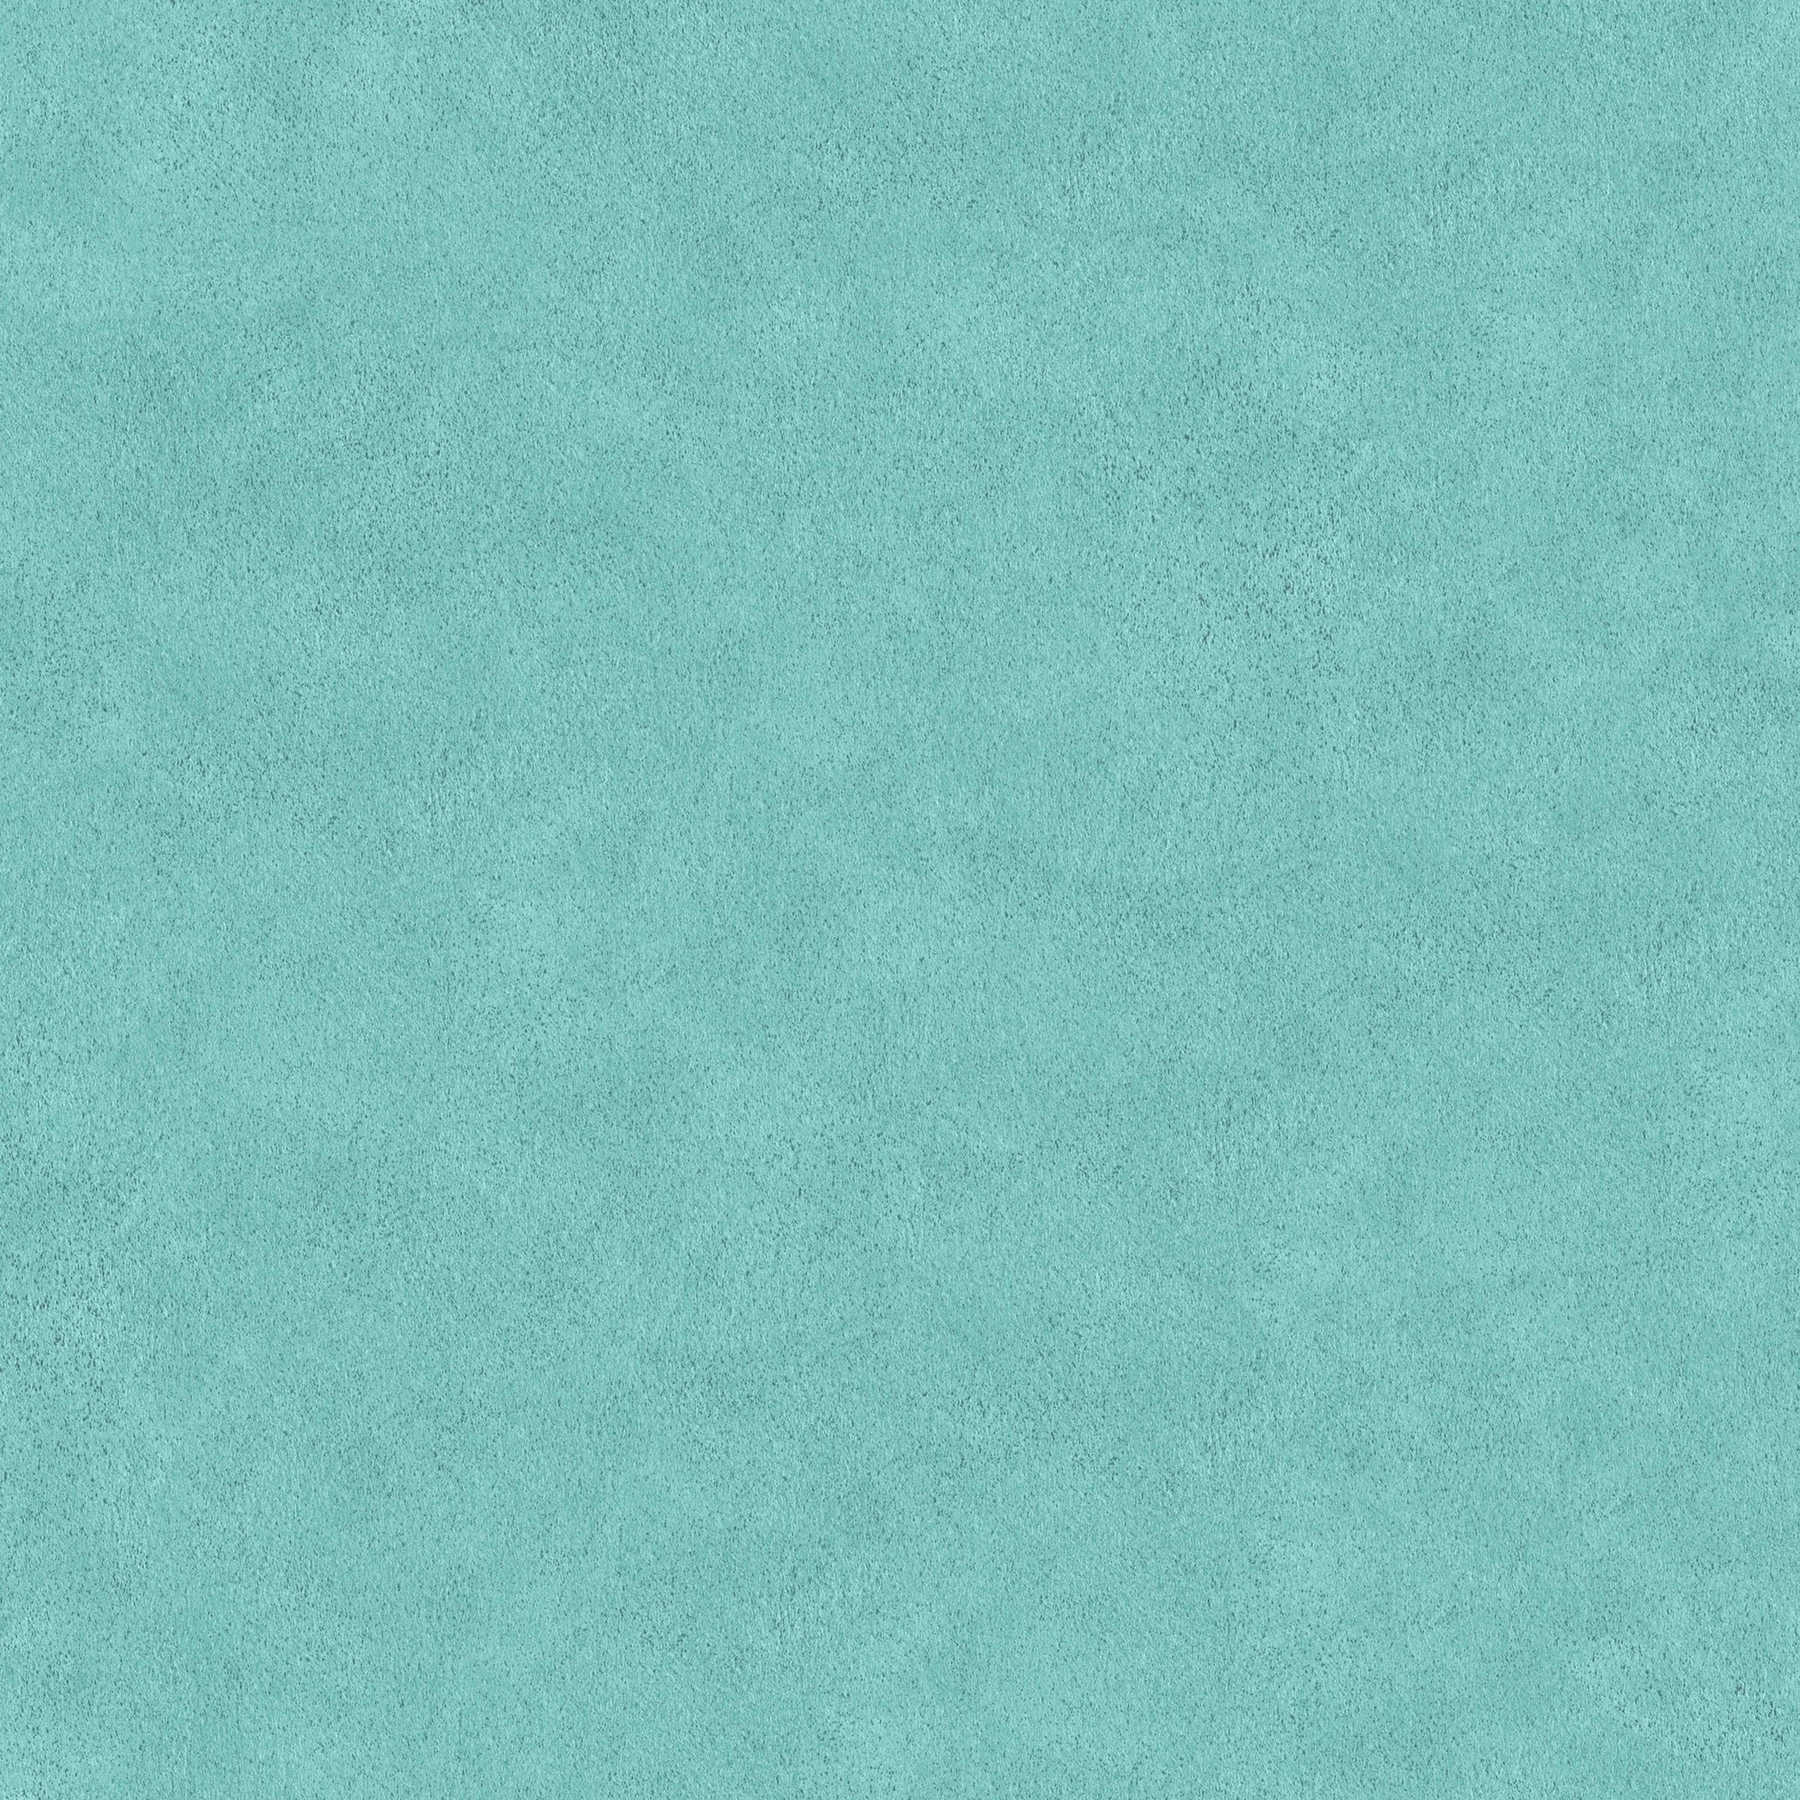 Plain wallpaper with fine mottled surface texture - blue
